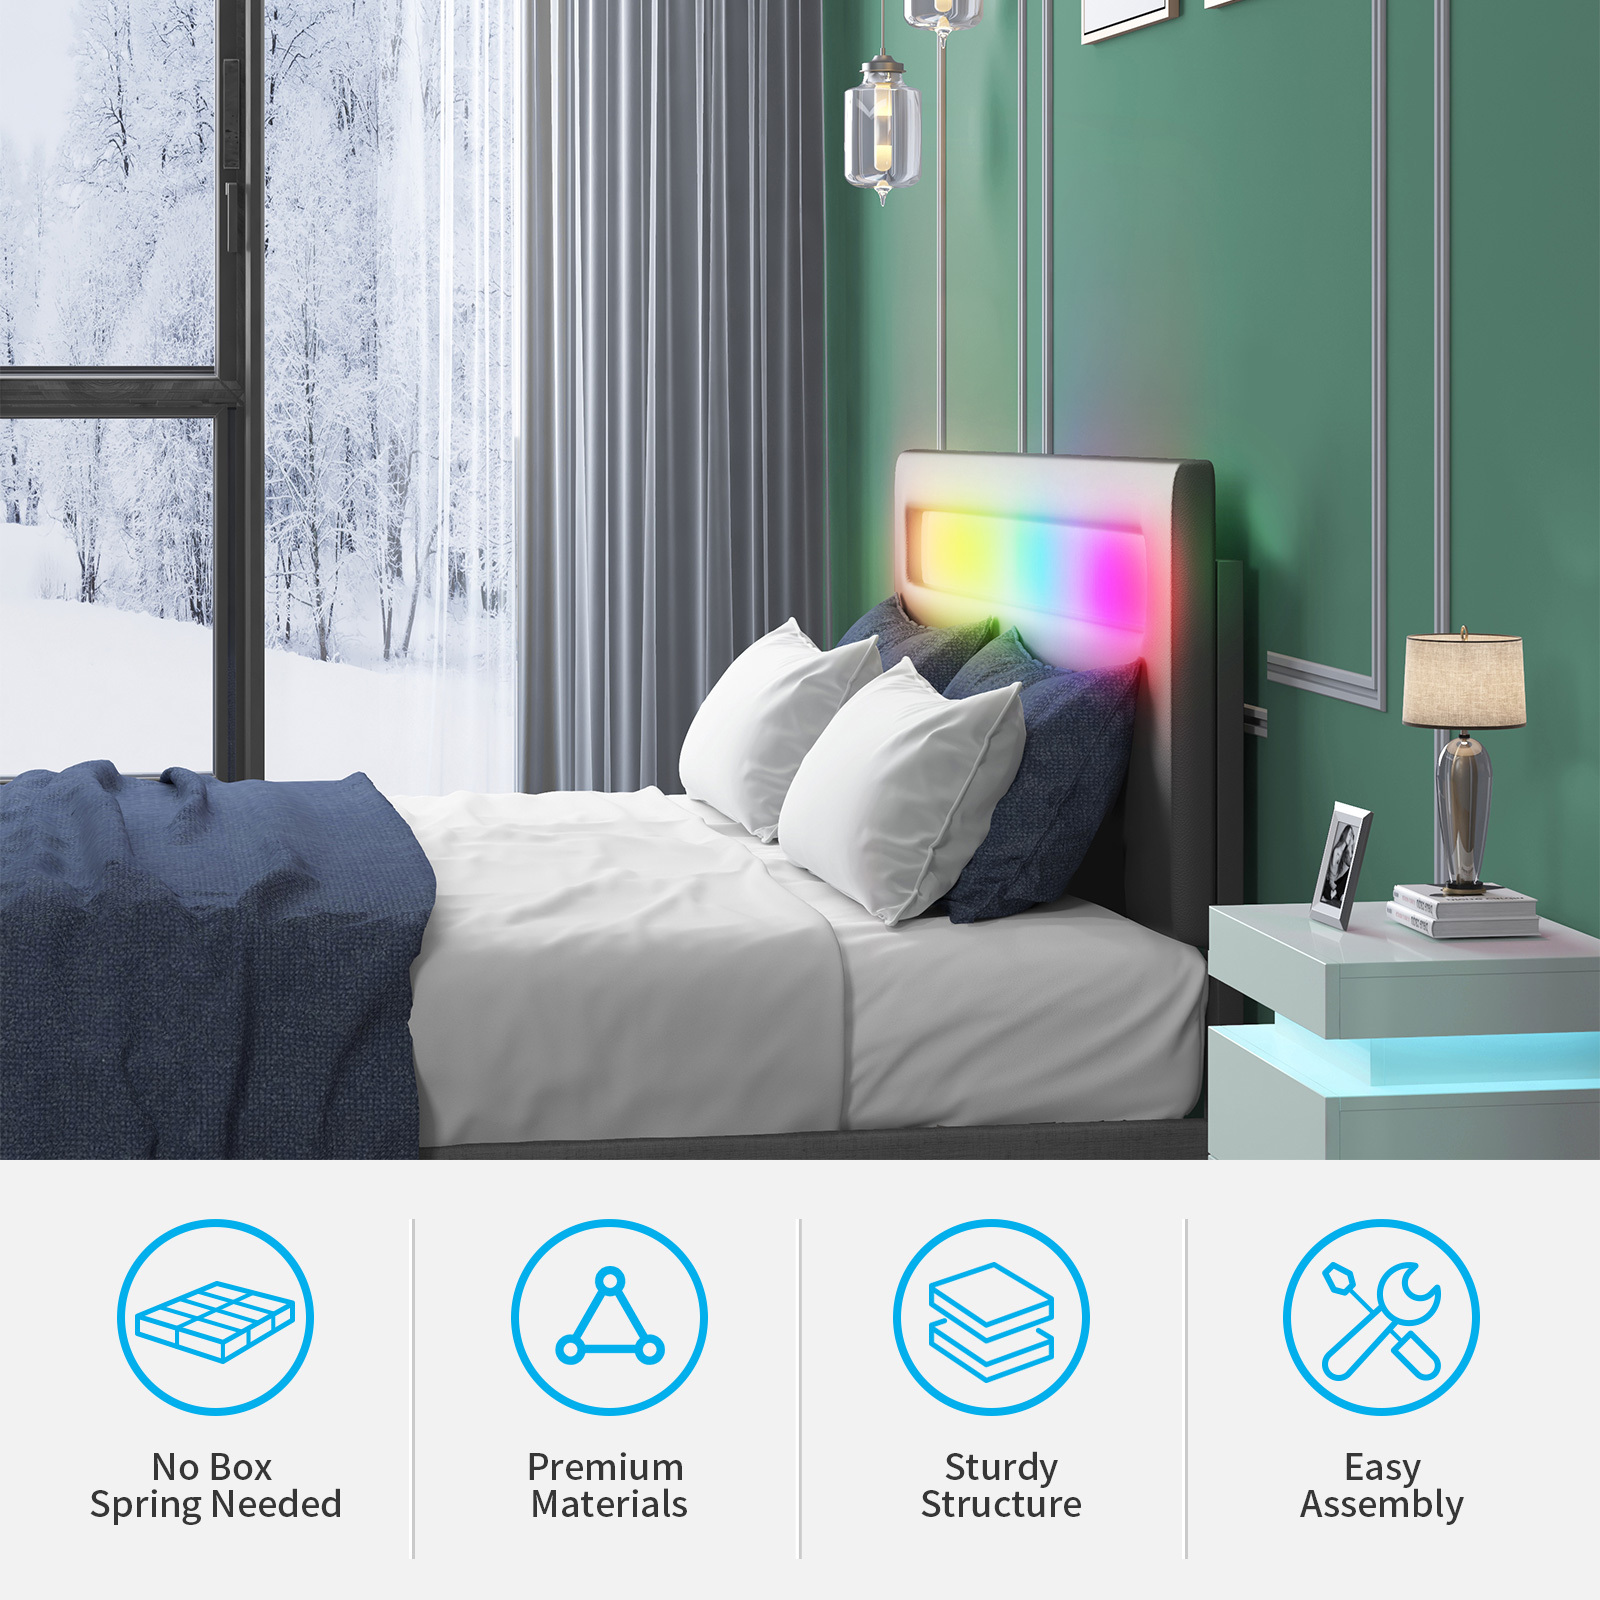 Mjkone Platform Bed Frame with Smart LED Strip Light, Full Size Bed Frame with RGB LED Headboard, RGB LED Light Controlled by Alexa or APP, Full Bed Frames Adjustable Lighting Effects (Full, Grey) - image 2 of 10